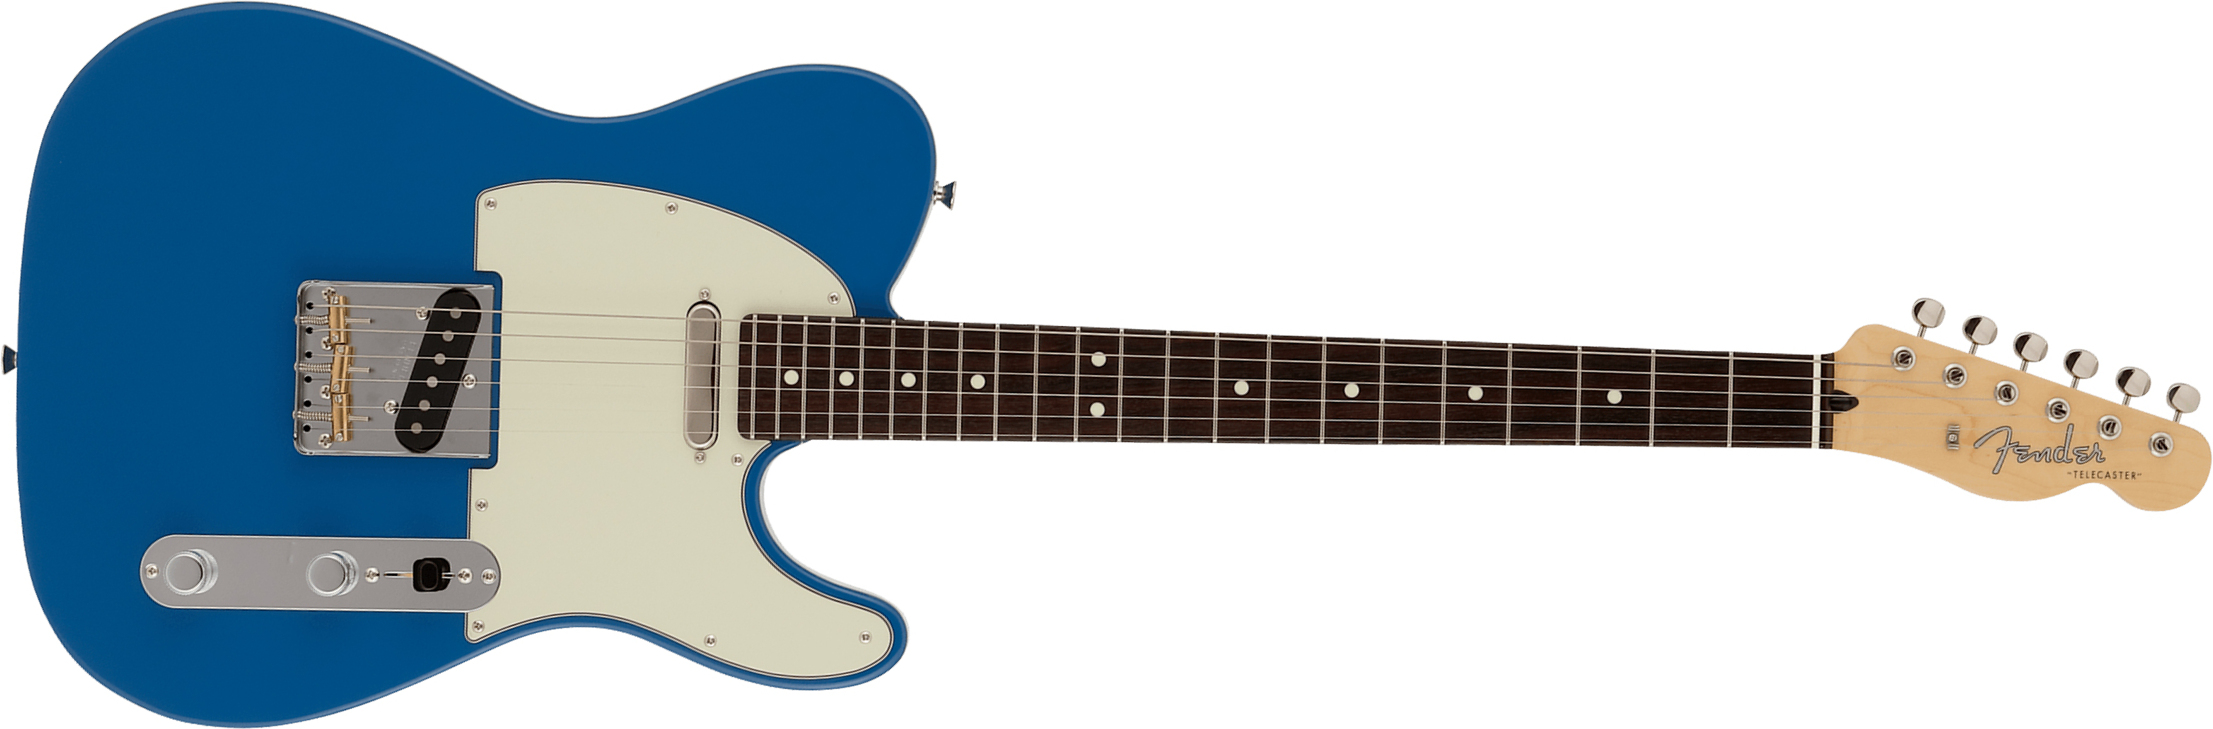 Fender Tele Hybrid Ii Jap 2s Ht Mn - Forest Blue - Tel shape electric guitar - Main picture